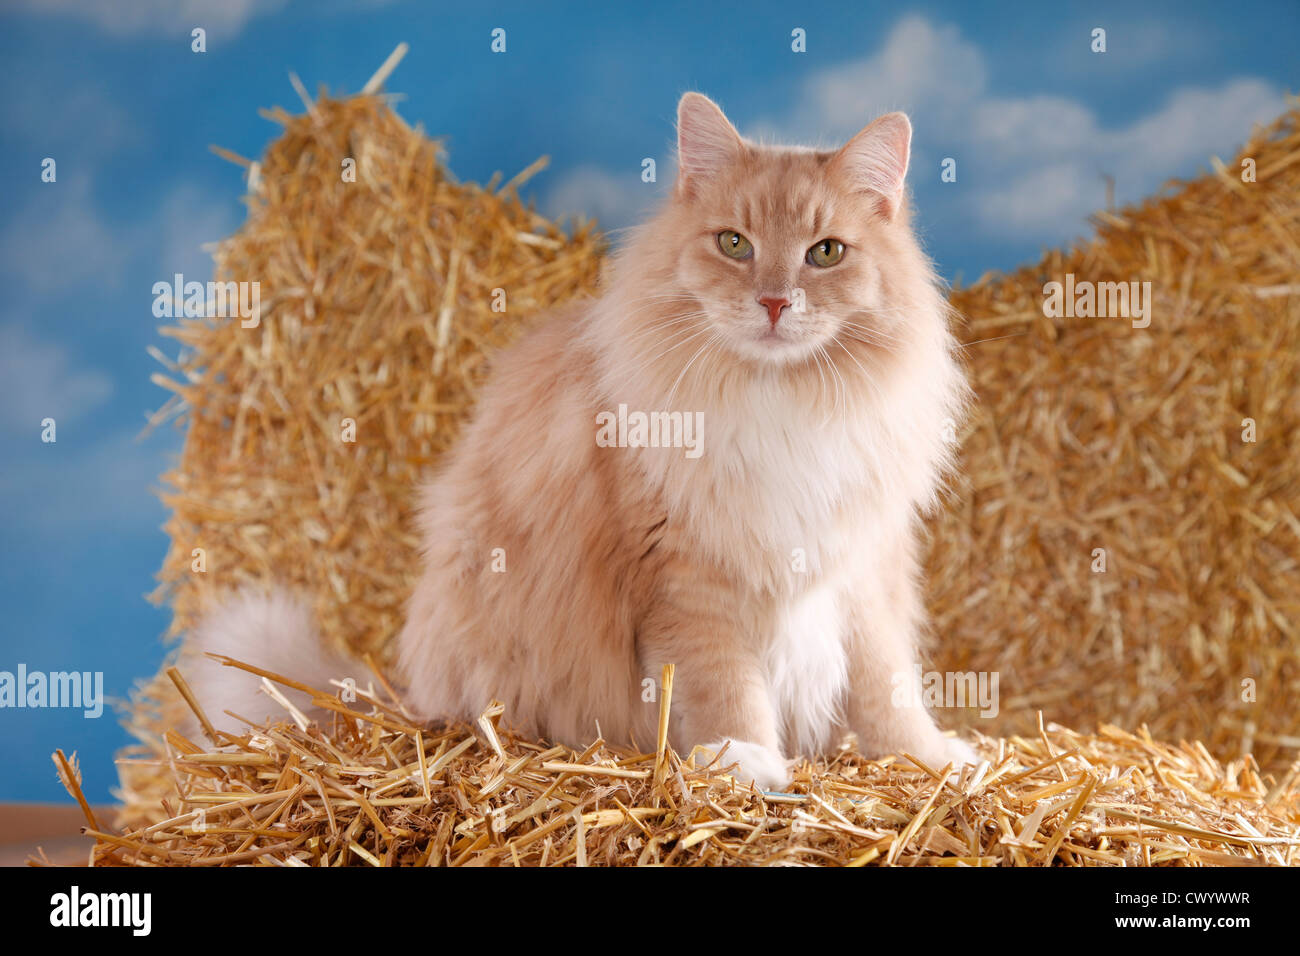 Siberian Cat in straw Stock Photo